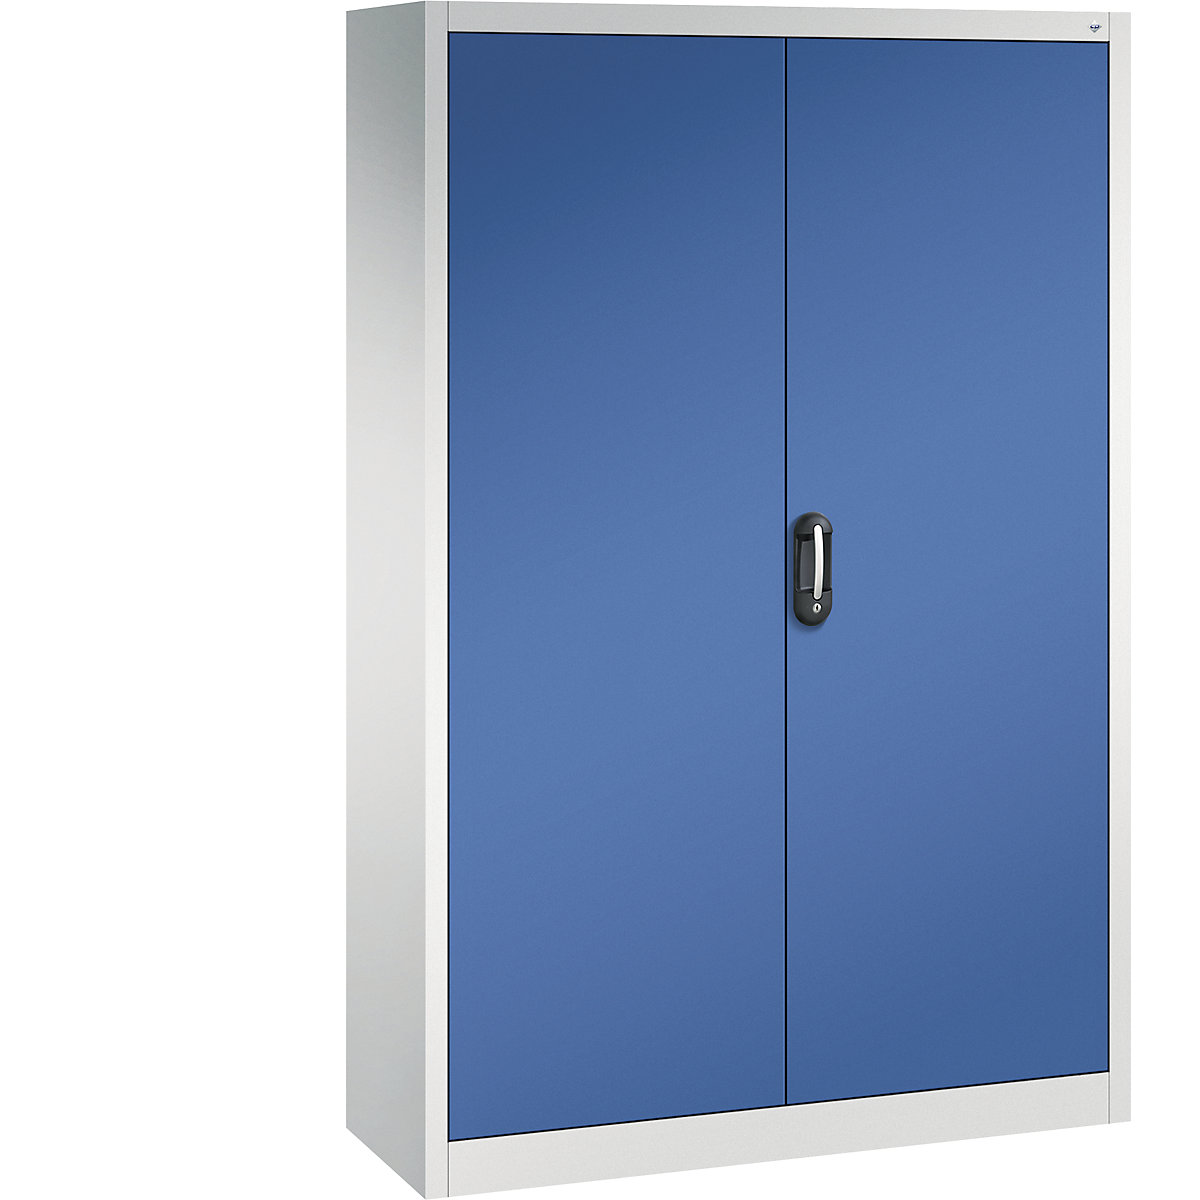 ACURADO universal cupboard – C+P, WxD 1200 x 400 mm, light grey / gentian blue-24